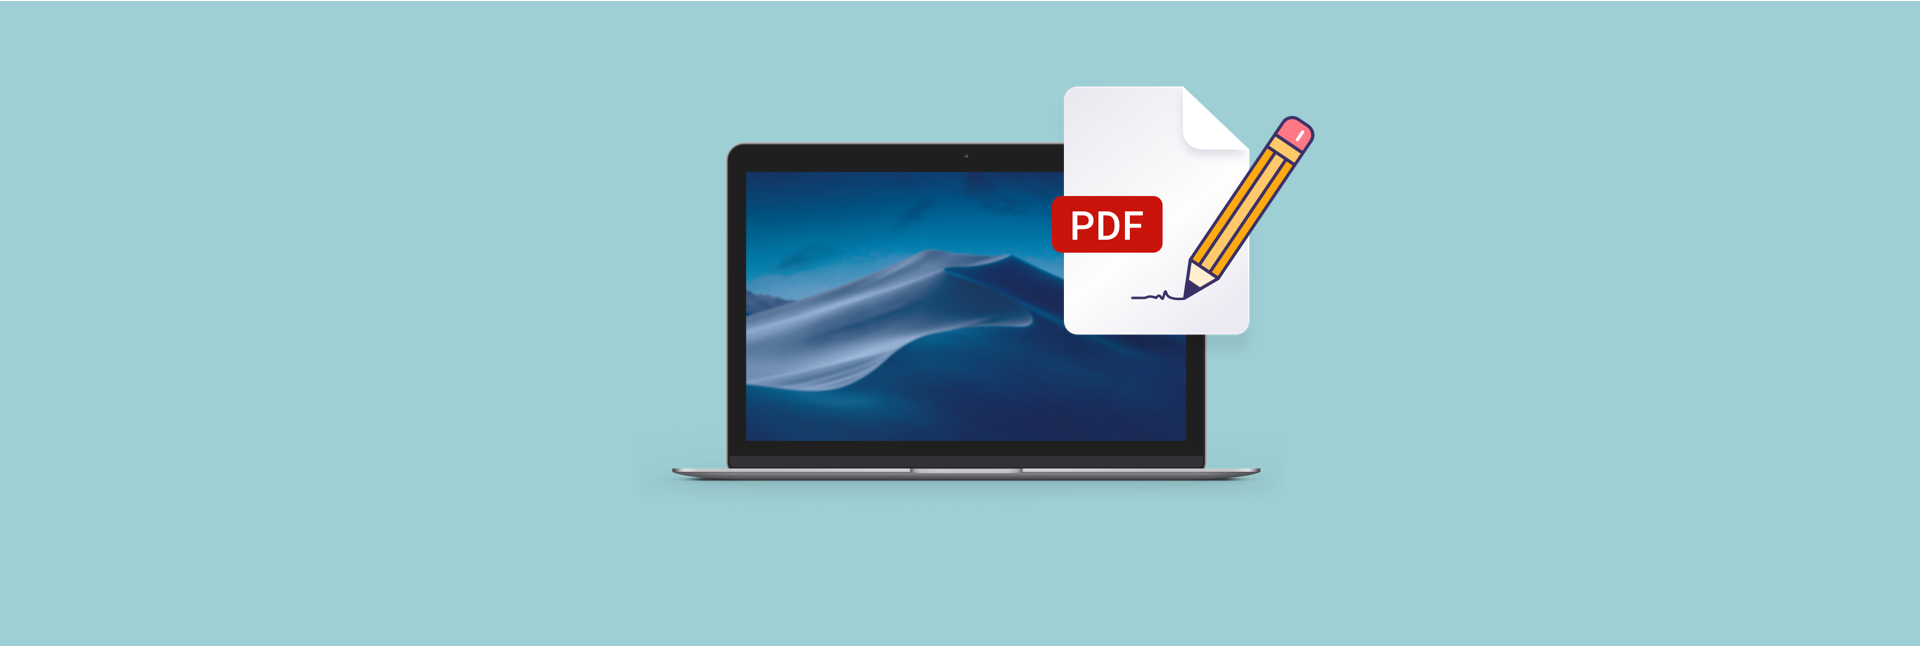 pdf writers for mac